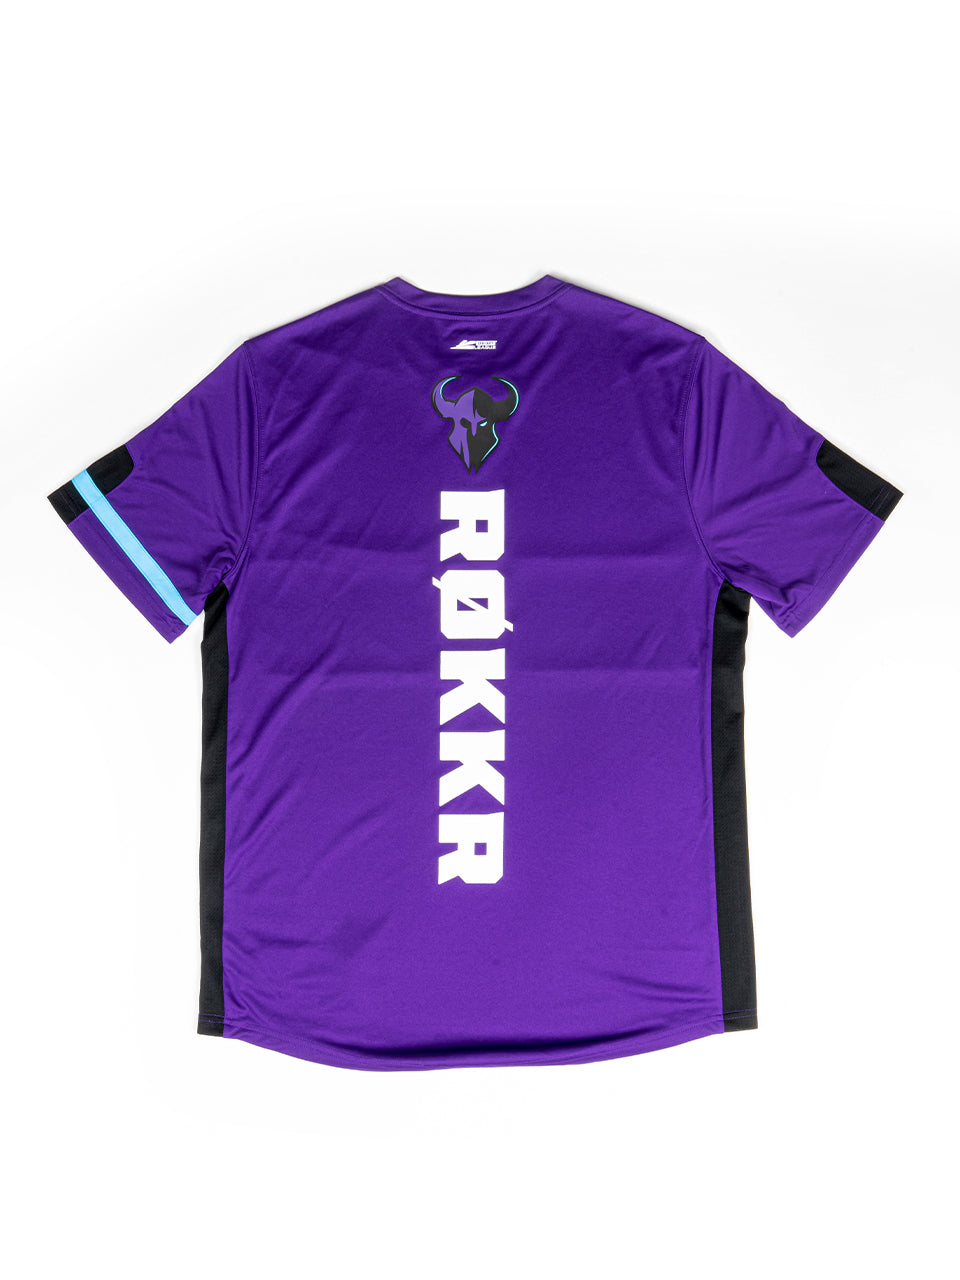 Minnesota RØKKR Official Player Kit - Jersey Purple